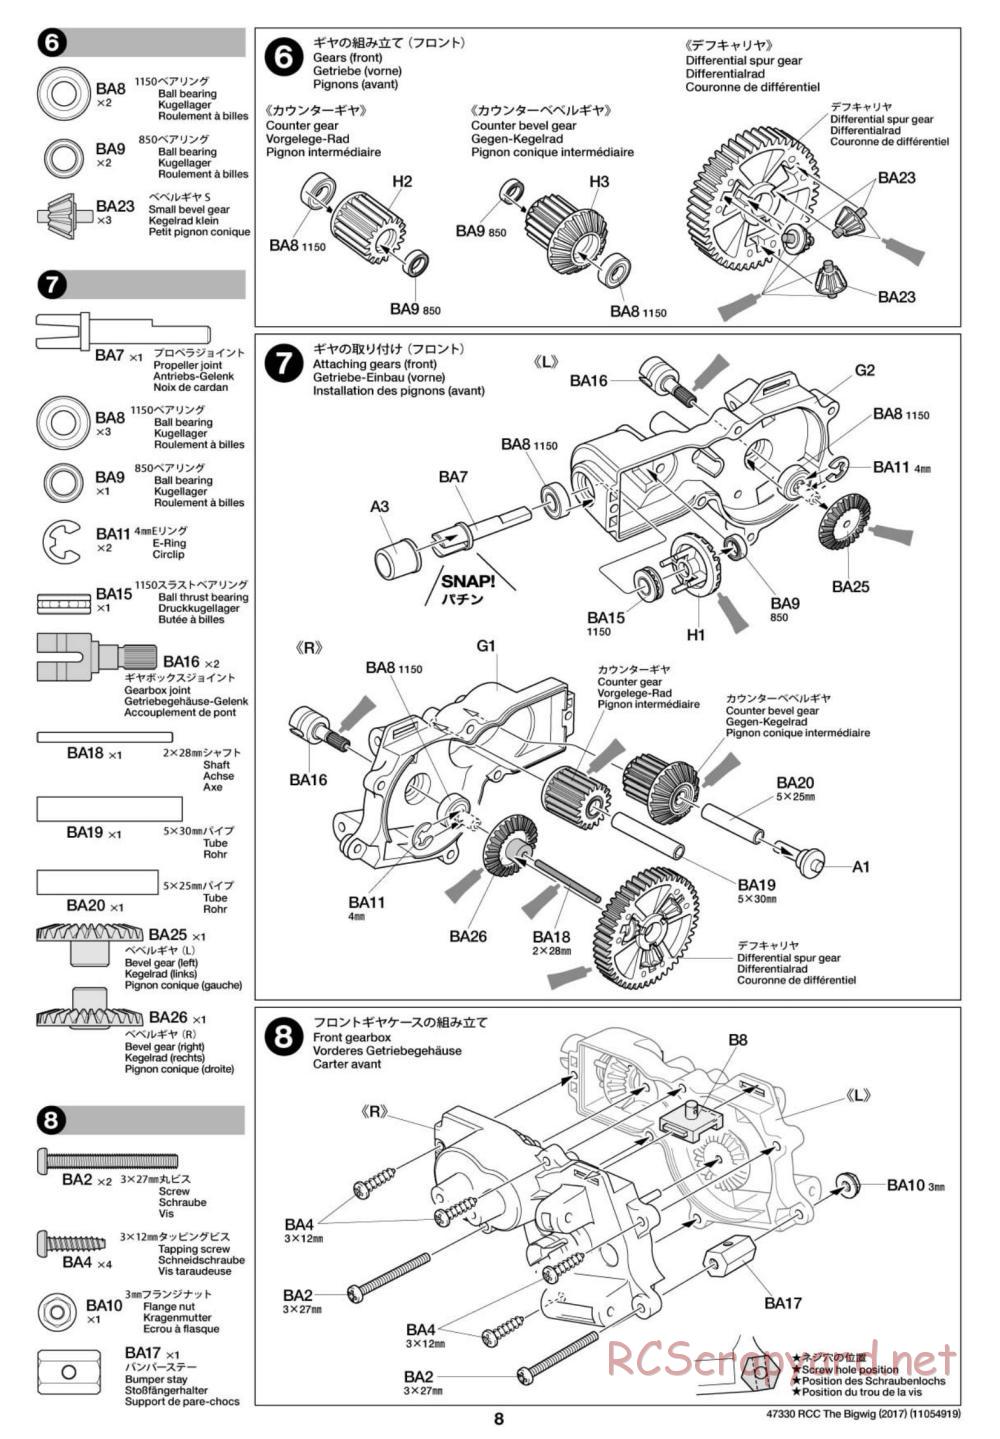 Tamiya - The Bigwig 2017 Chassis - Manual - Page 8